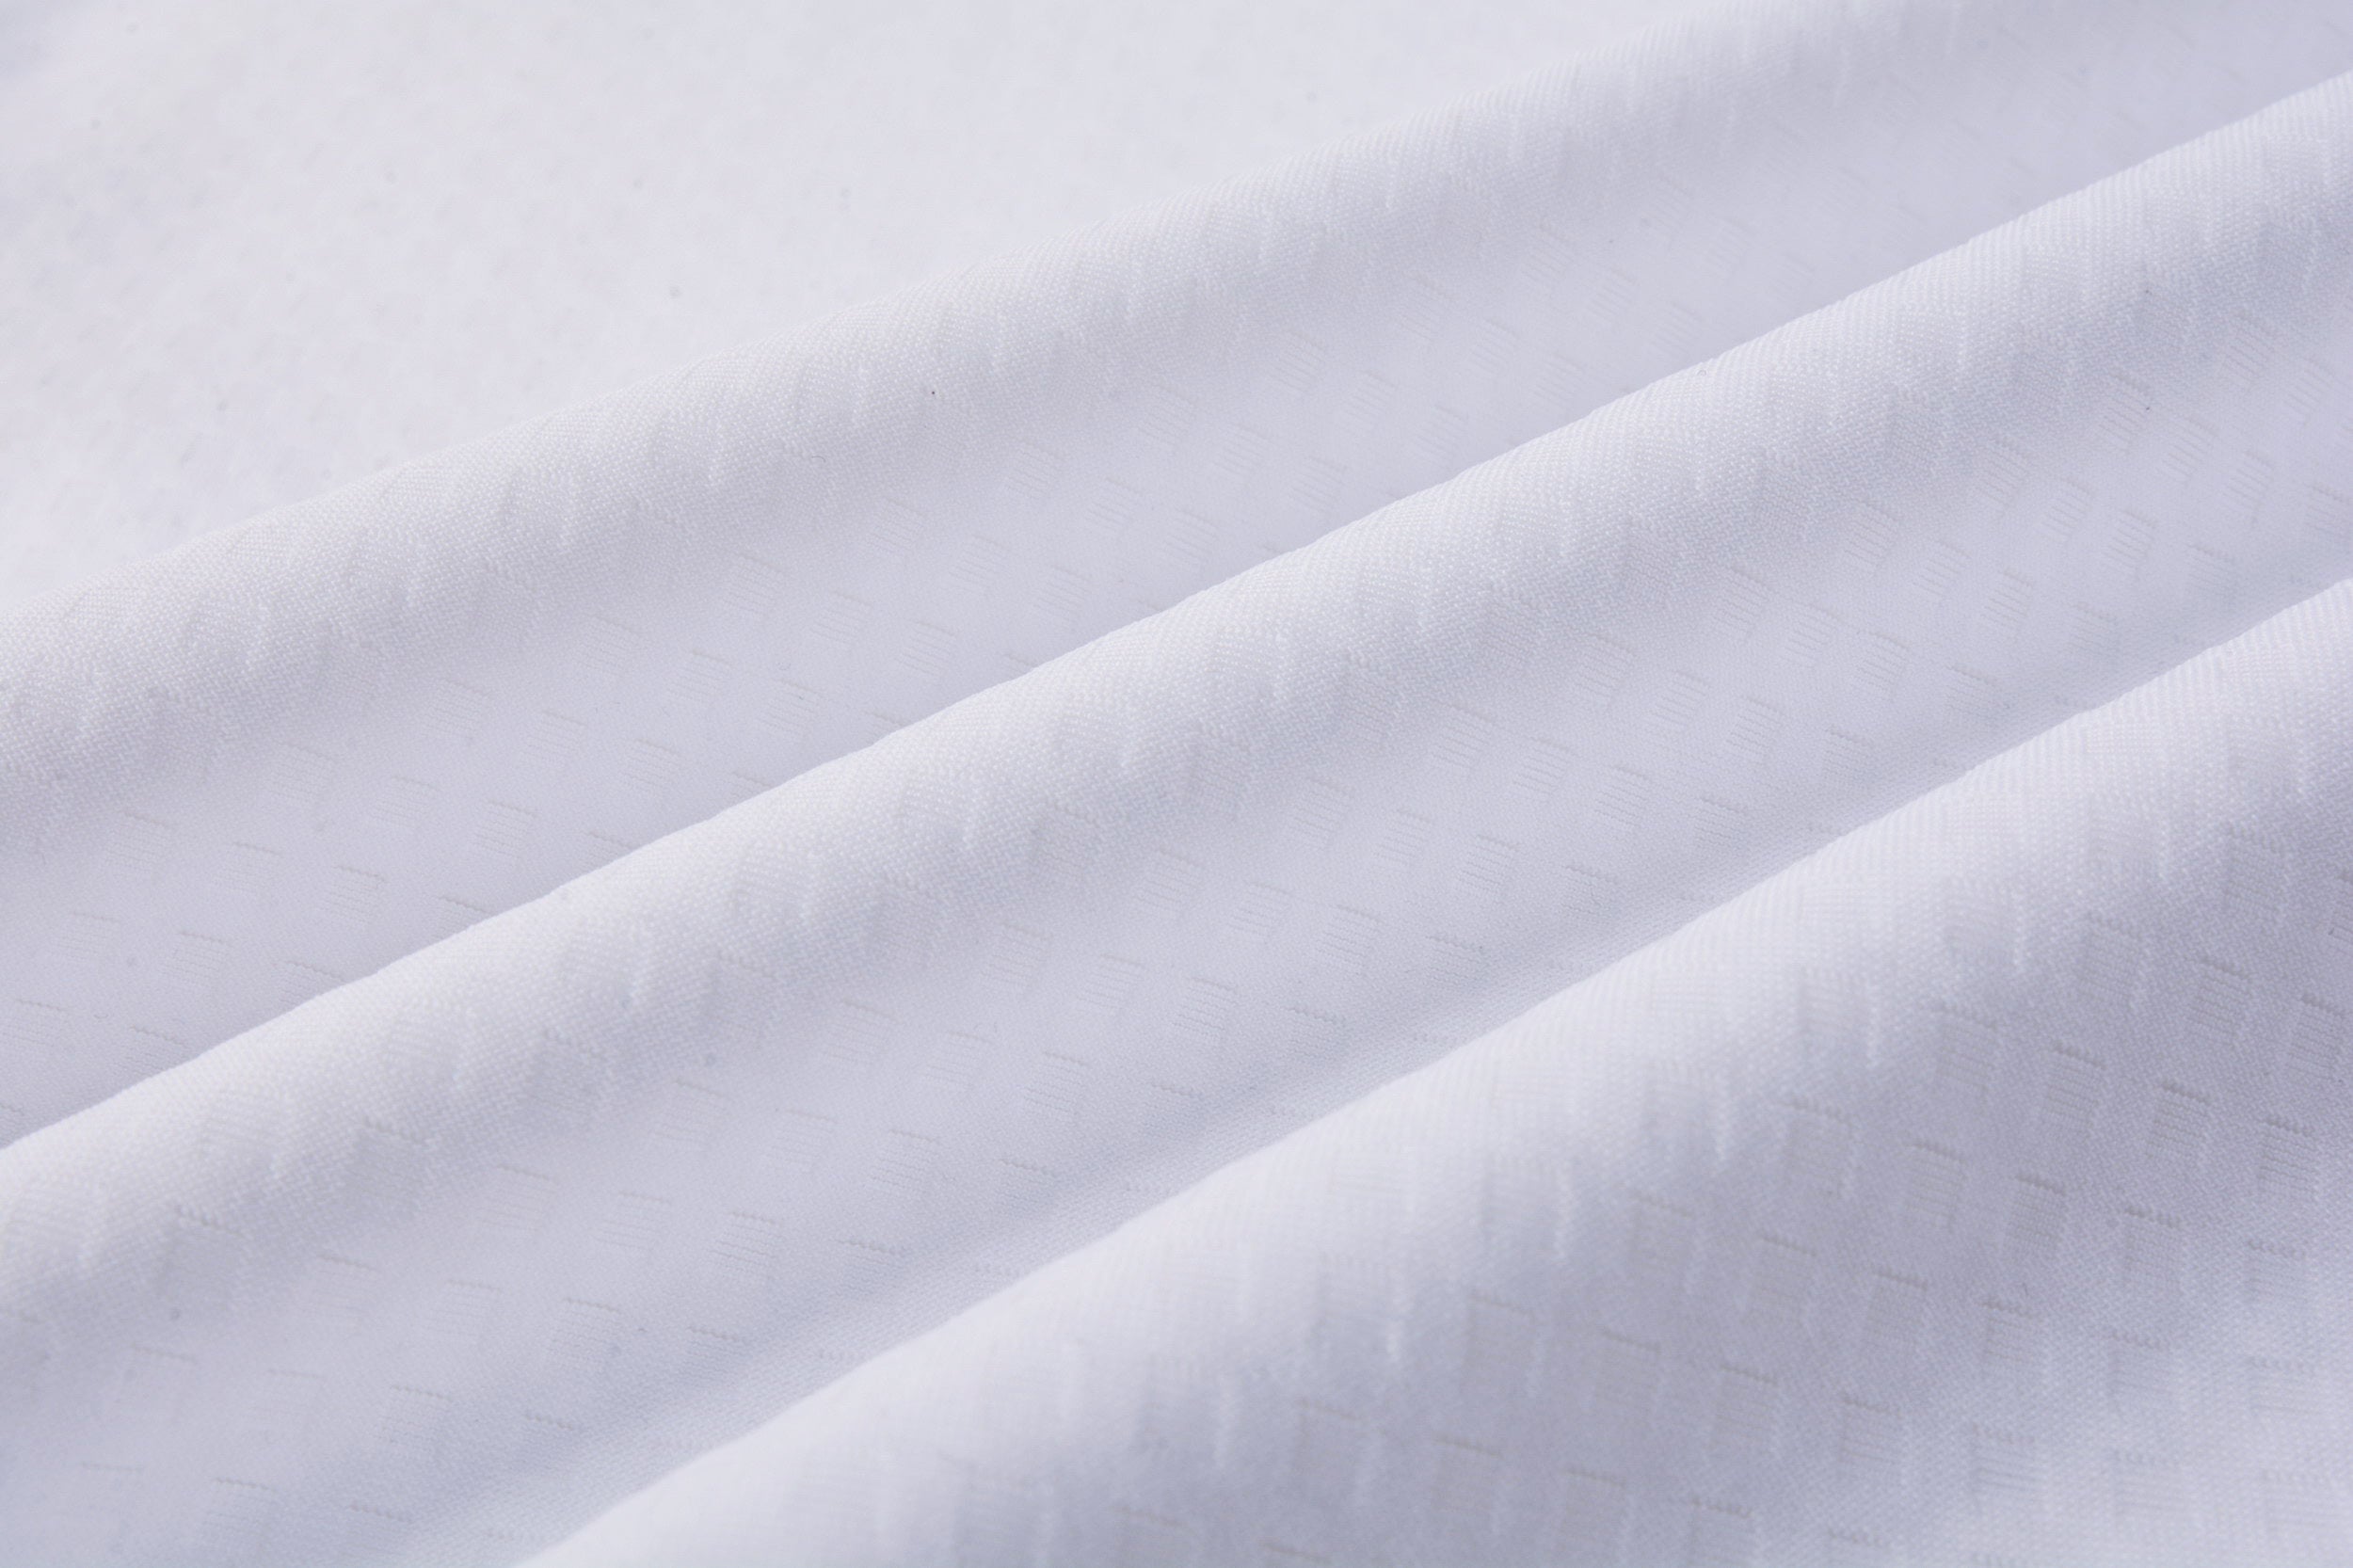 Women's Sleeved Base Layer - White